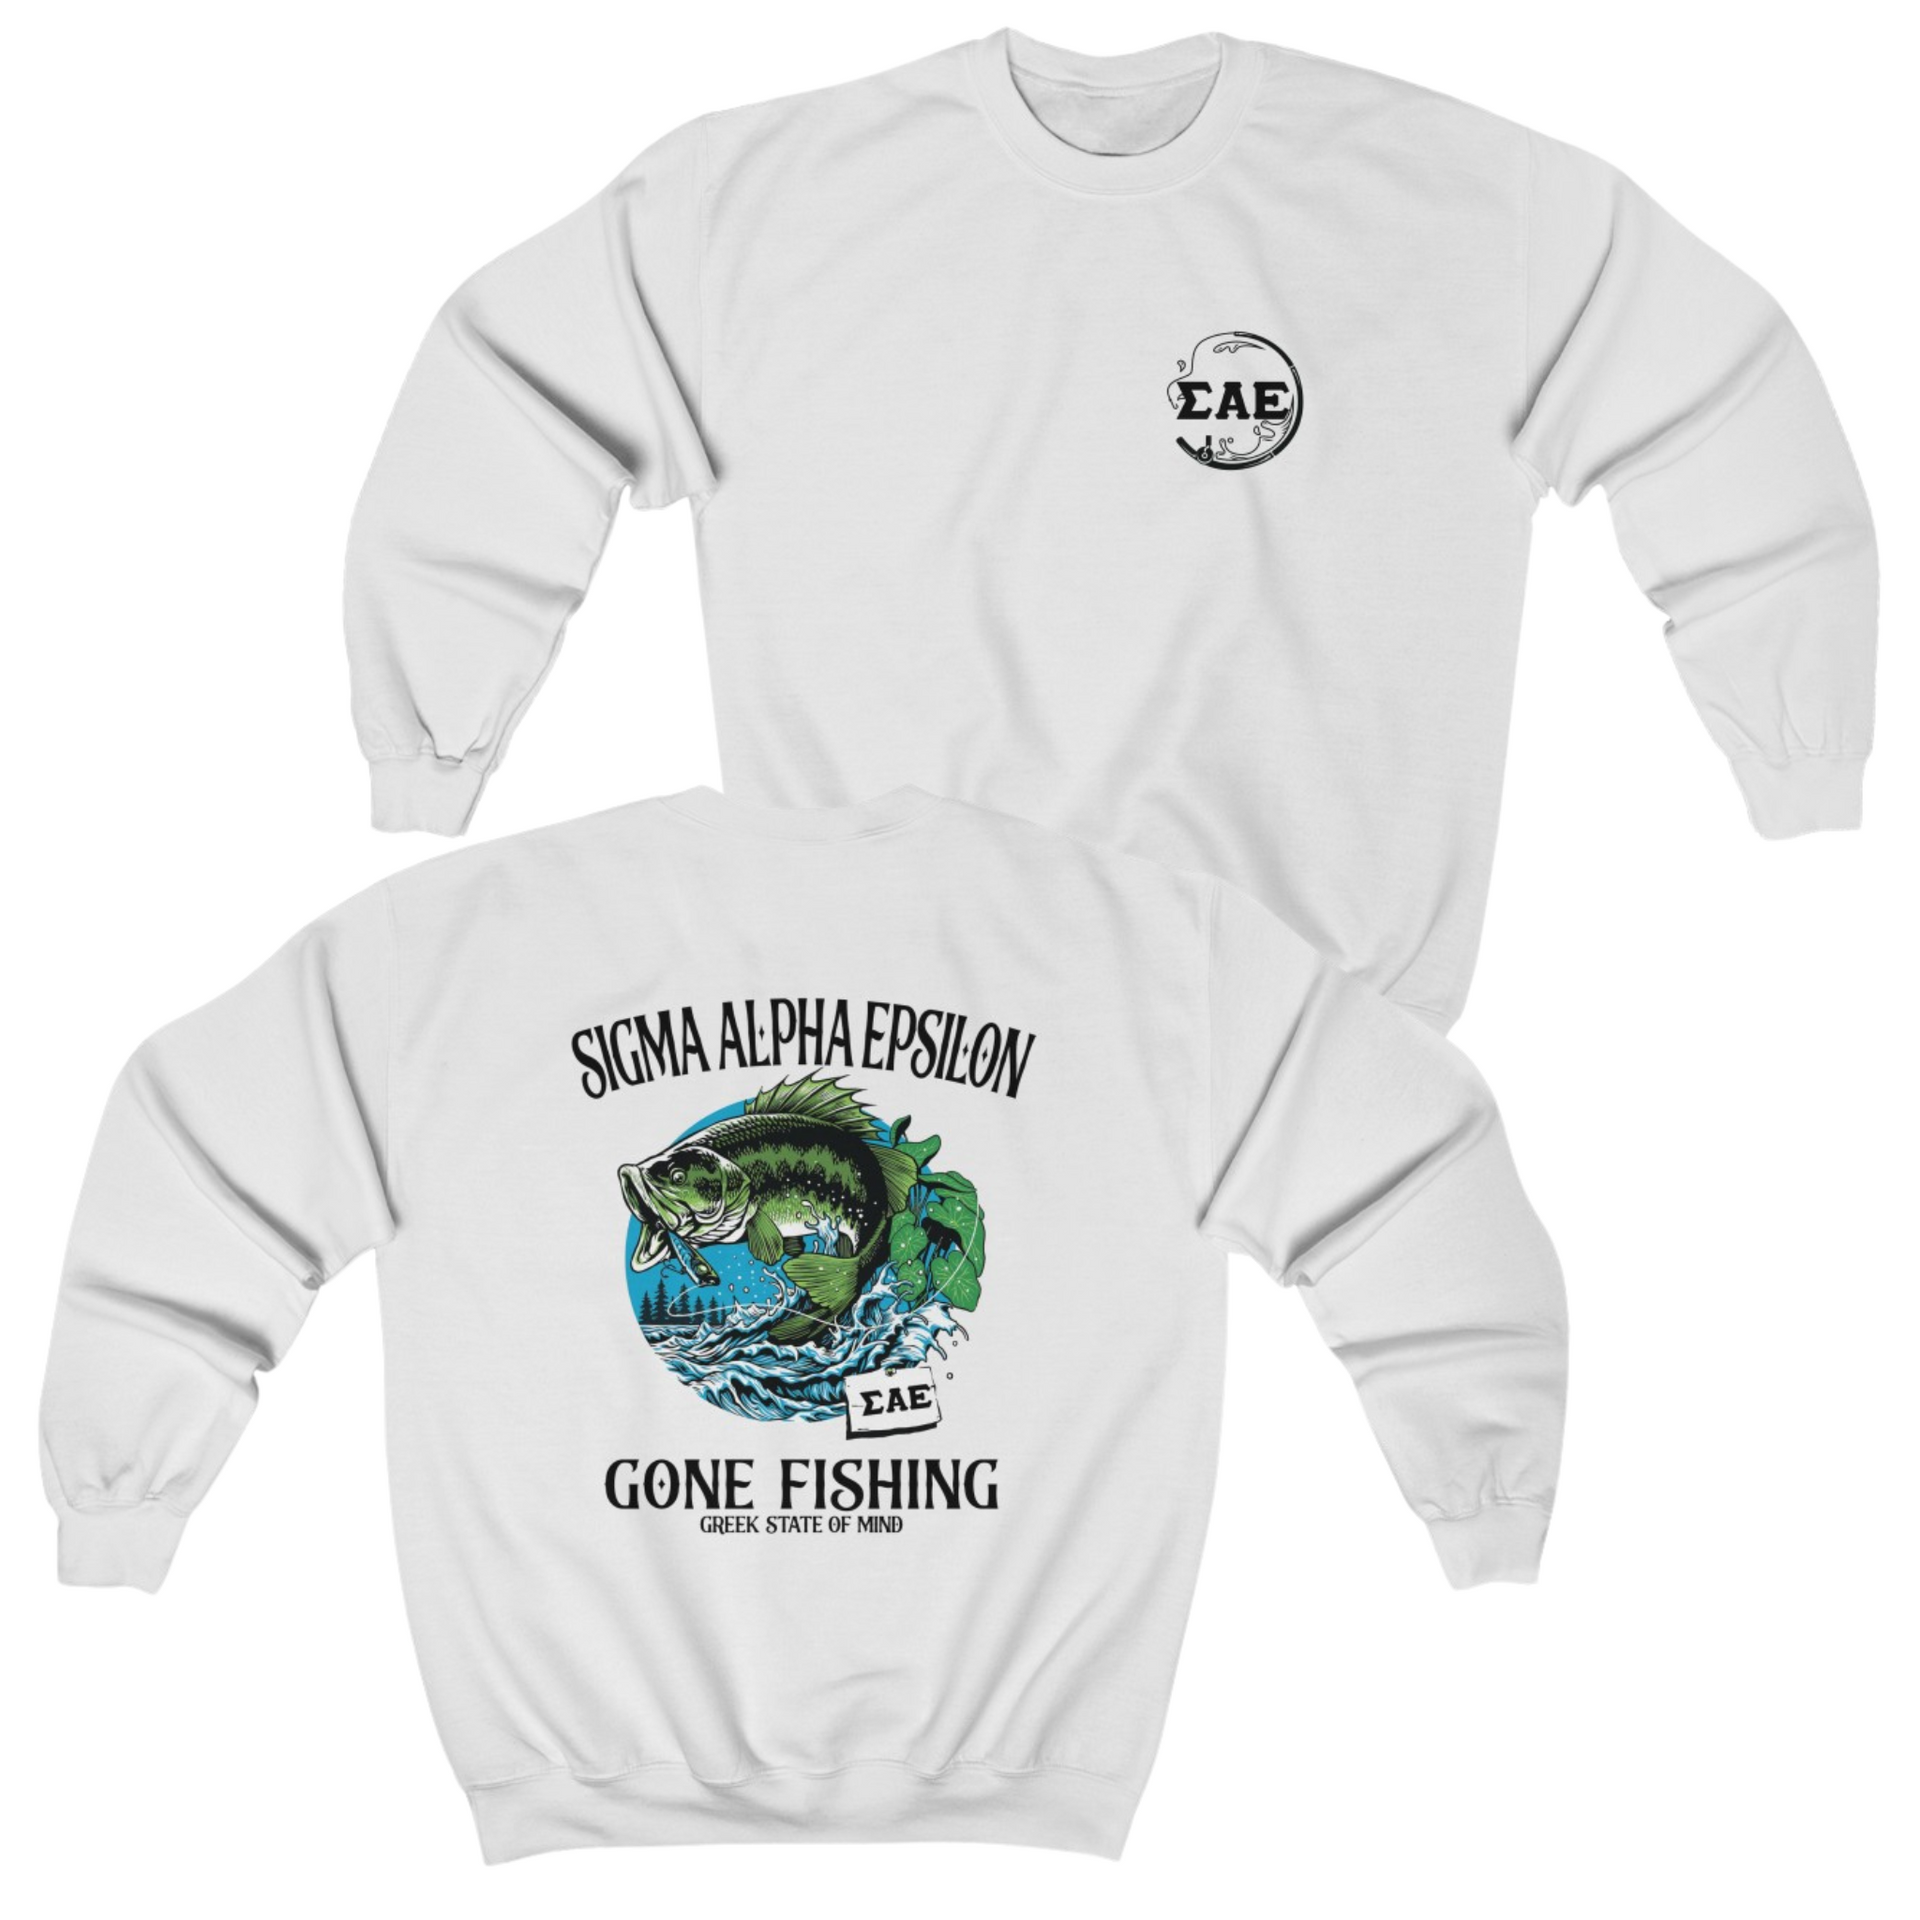 White Sigma Alpha Epsilon Graphic Crewneck Sweatshirt | Gone Fishing | Sigma Alpha Epsilon Clothing and Merchandise